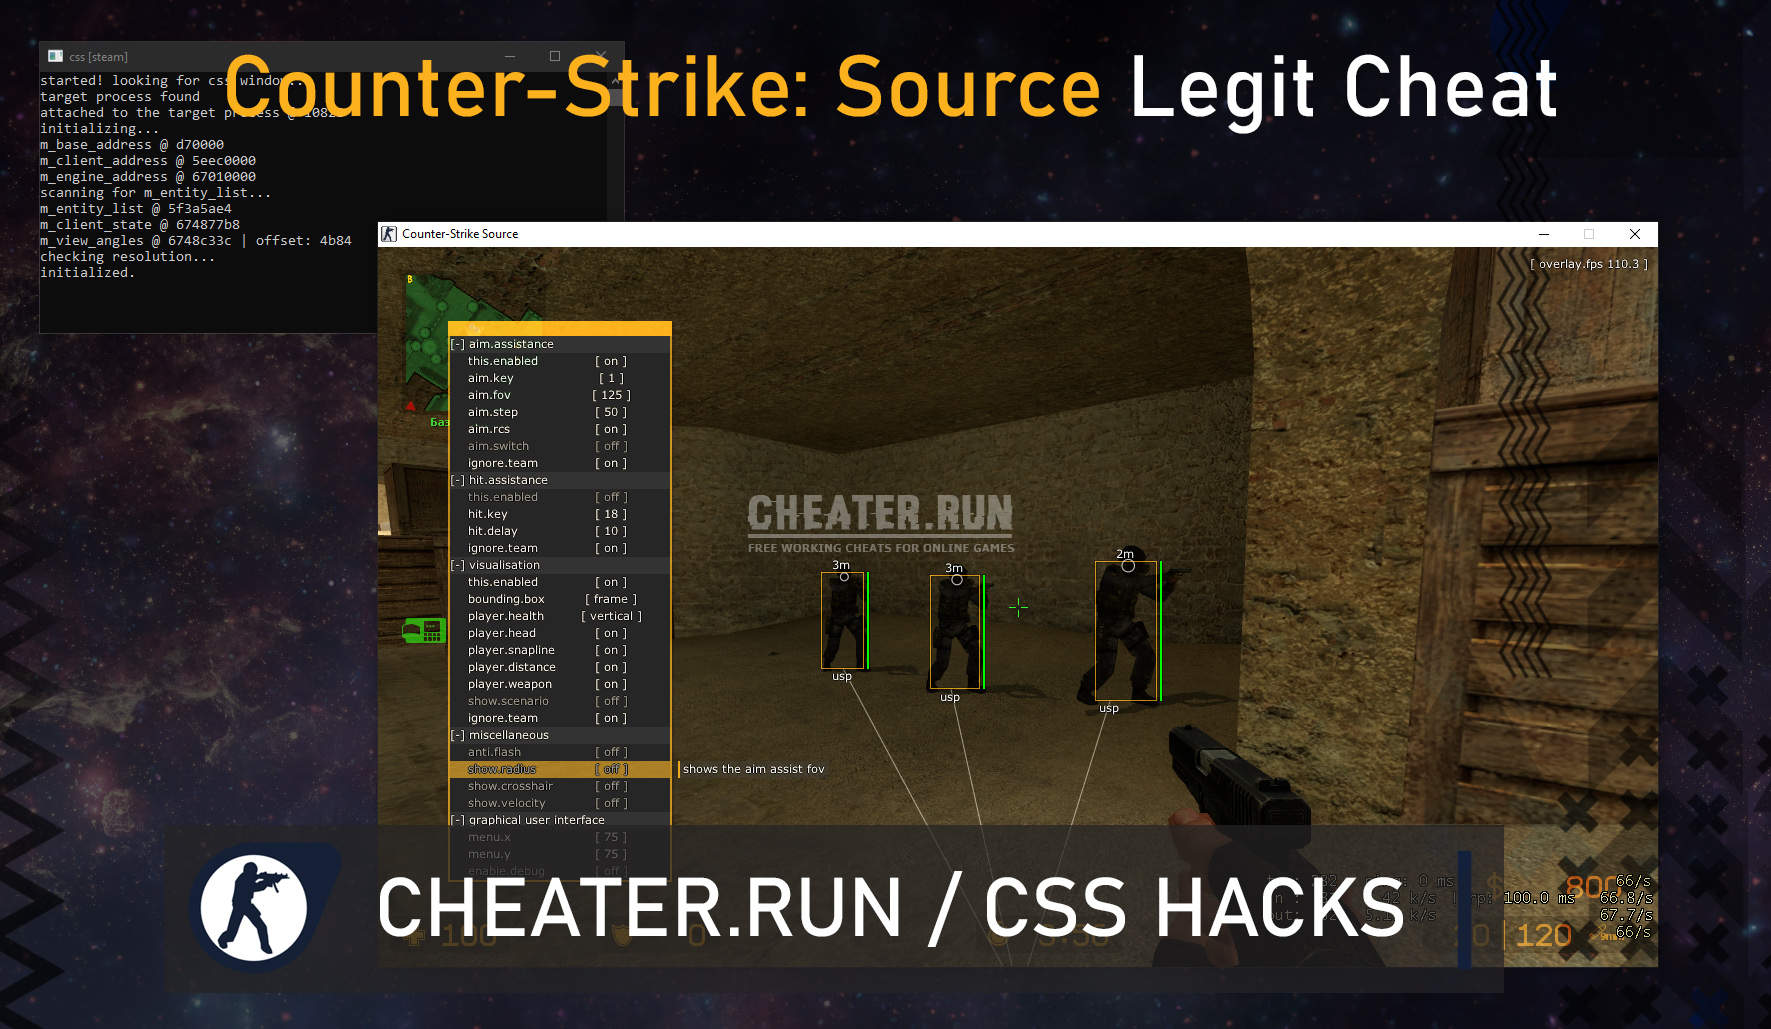 Counter-Strike: Source Legit Cheat - Aimbot, Visuals, Mics